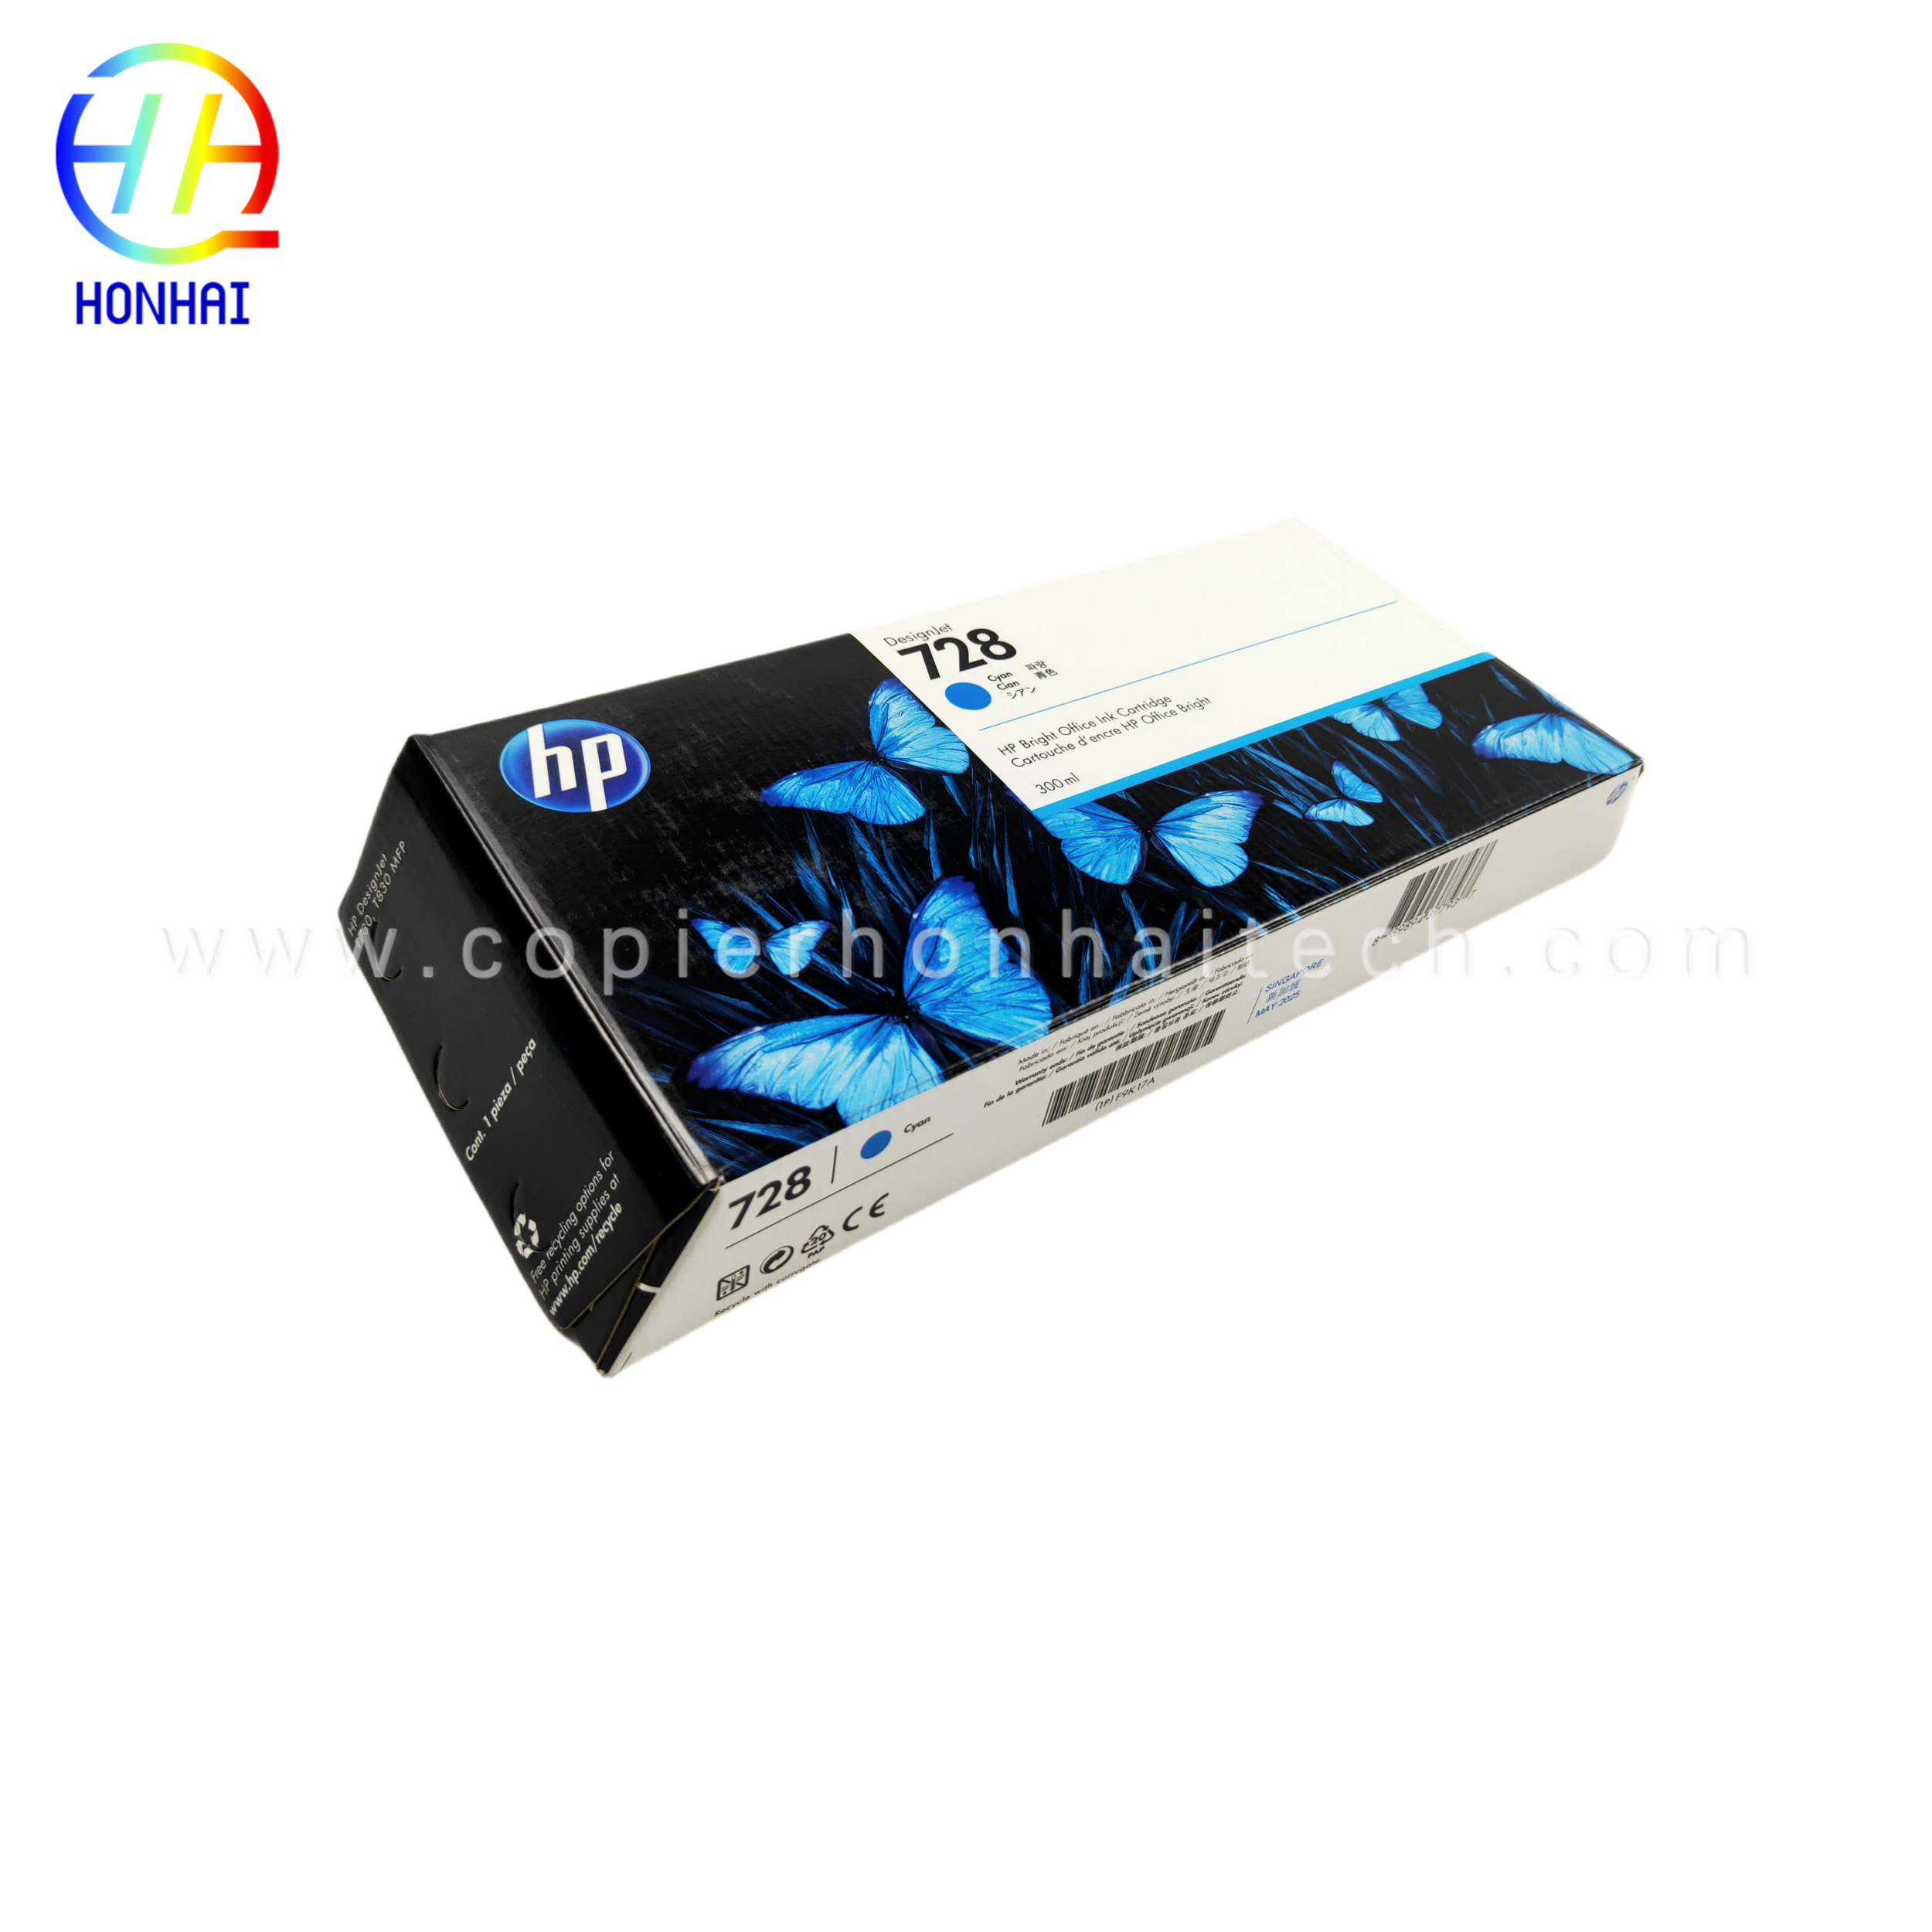 https://www.copierhonhaitech.com/original-new-ink-cartridge-cyan-for-hp-designjet-t730-and-t830-large-format-plotter-printers-and-hp-729-designjet-printhead- 728-f9k17a-produto/